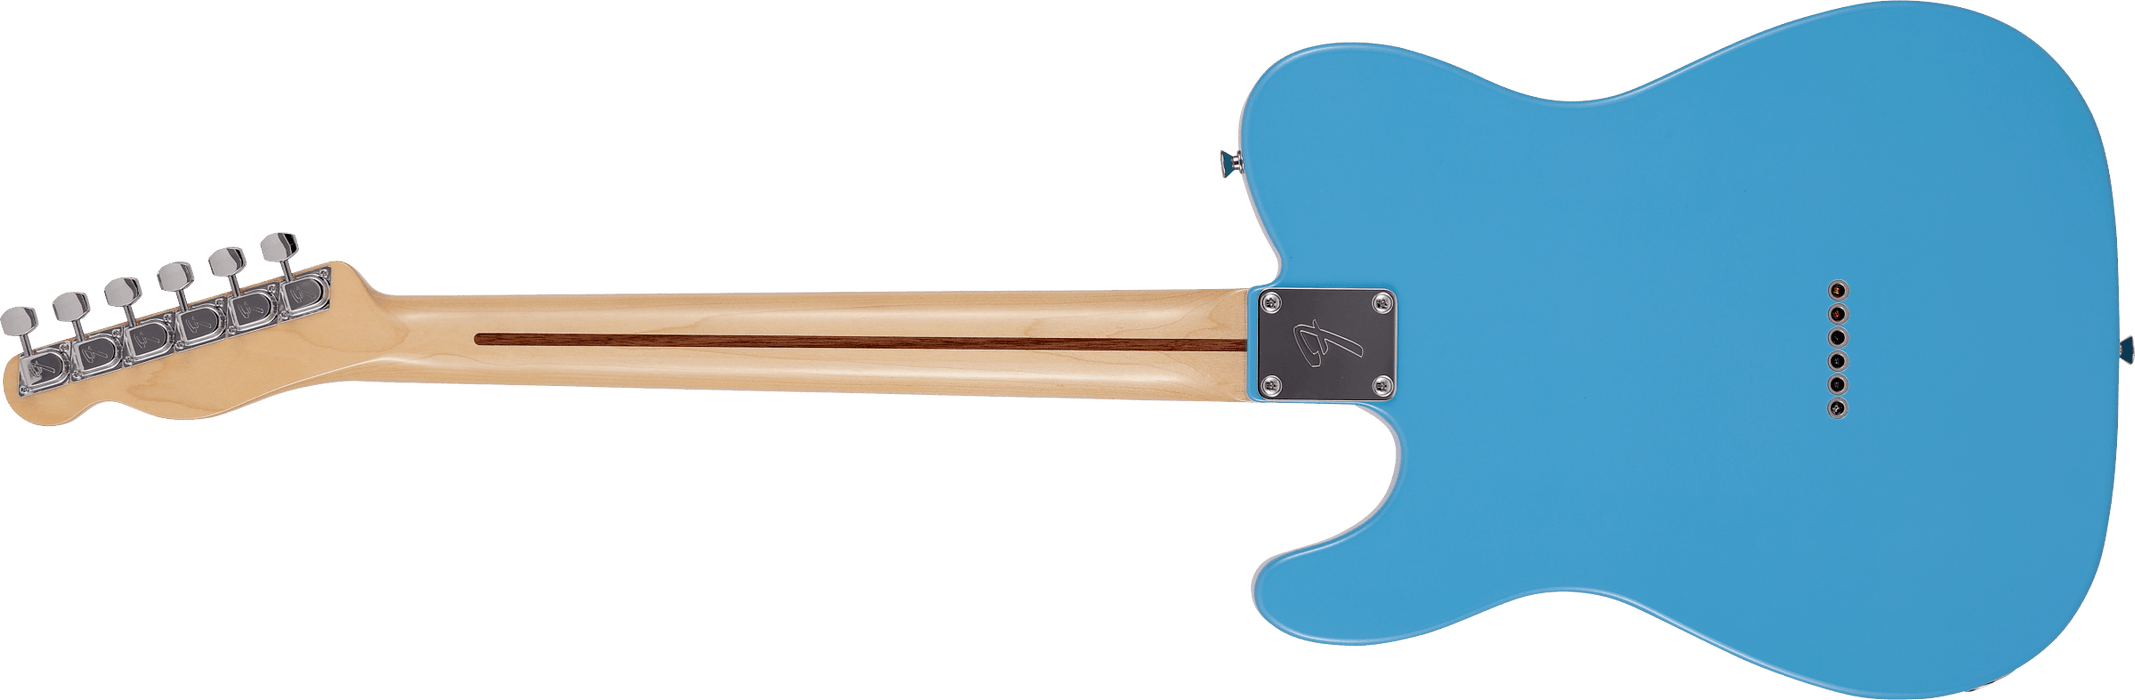 Fender Made in Japan Limited International Color Telecaster Rosewood Fingerboard Maui Blue Electric Guitar With Gig Bag